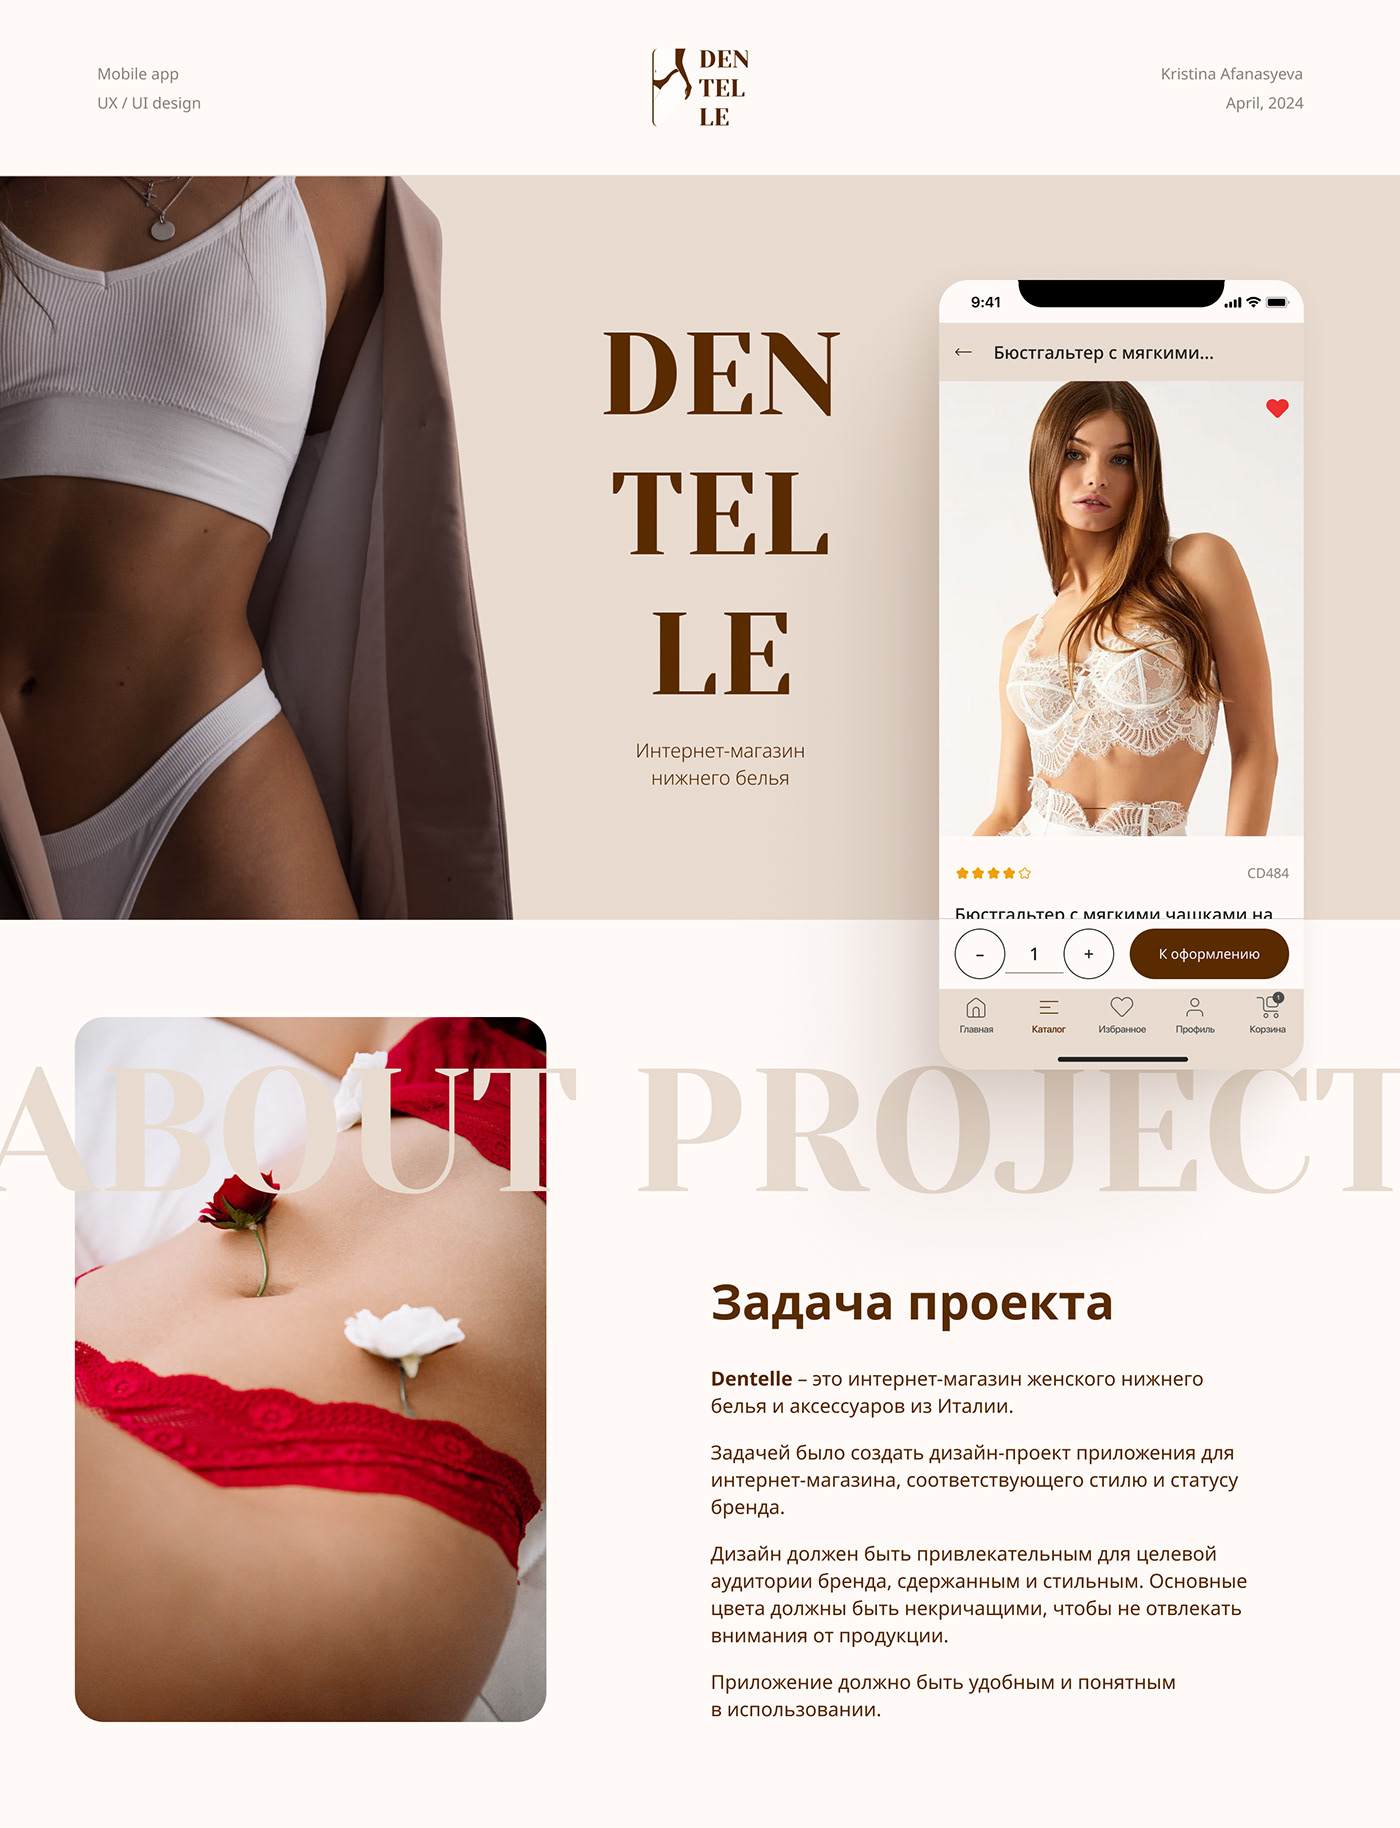 Mobile app online store underwear lingerie UX design ui design logo нижнее белье интернет-магазин приложение